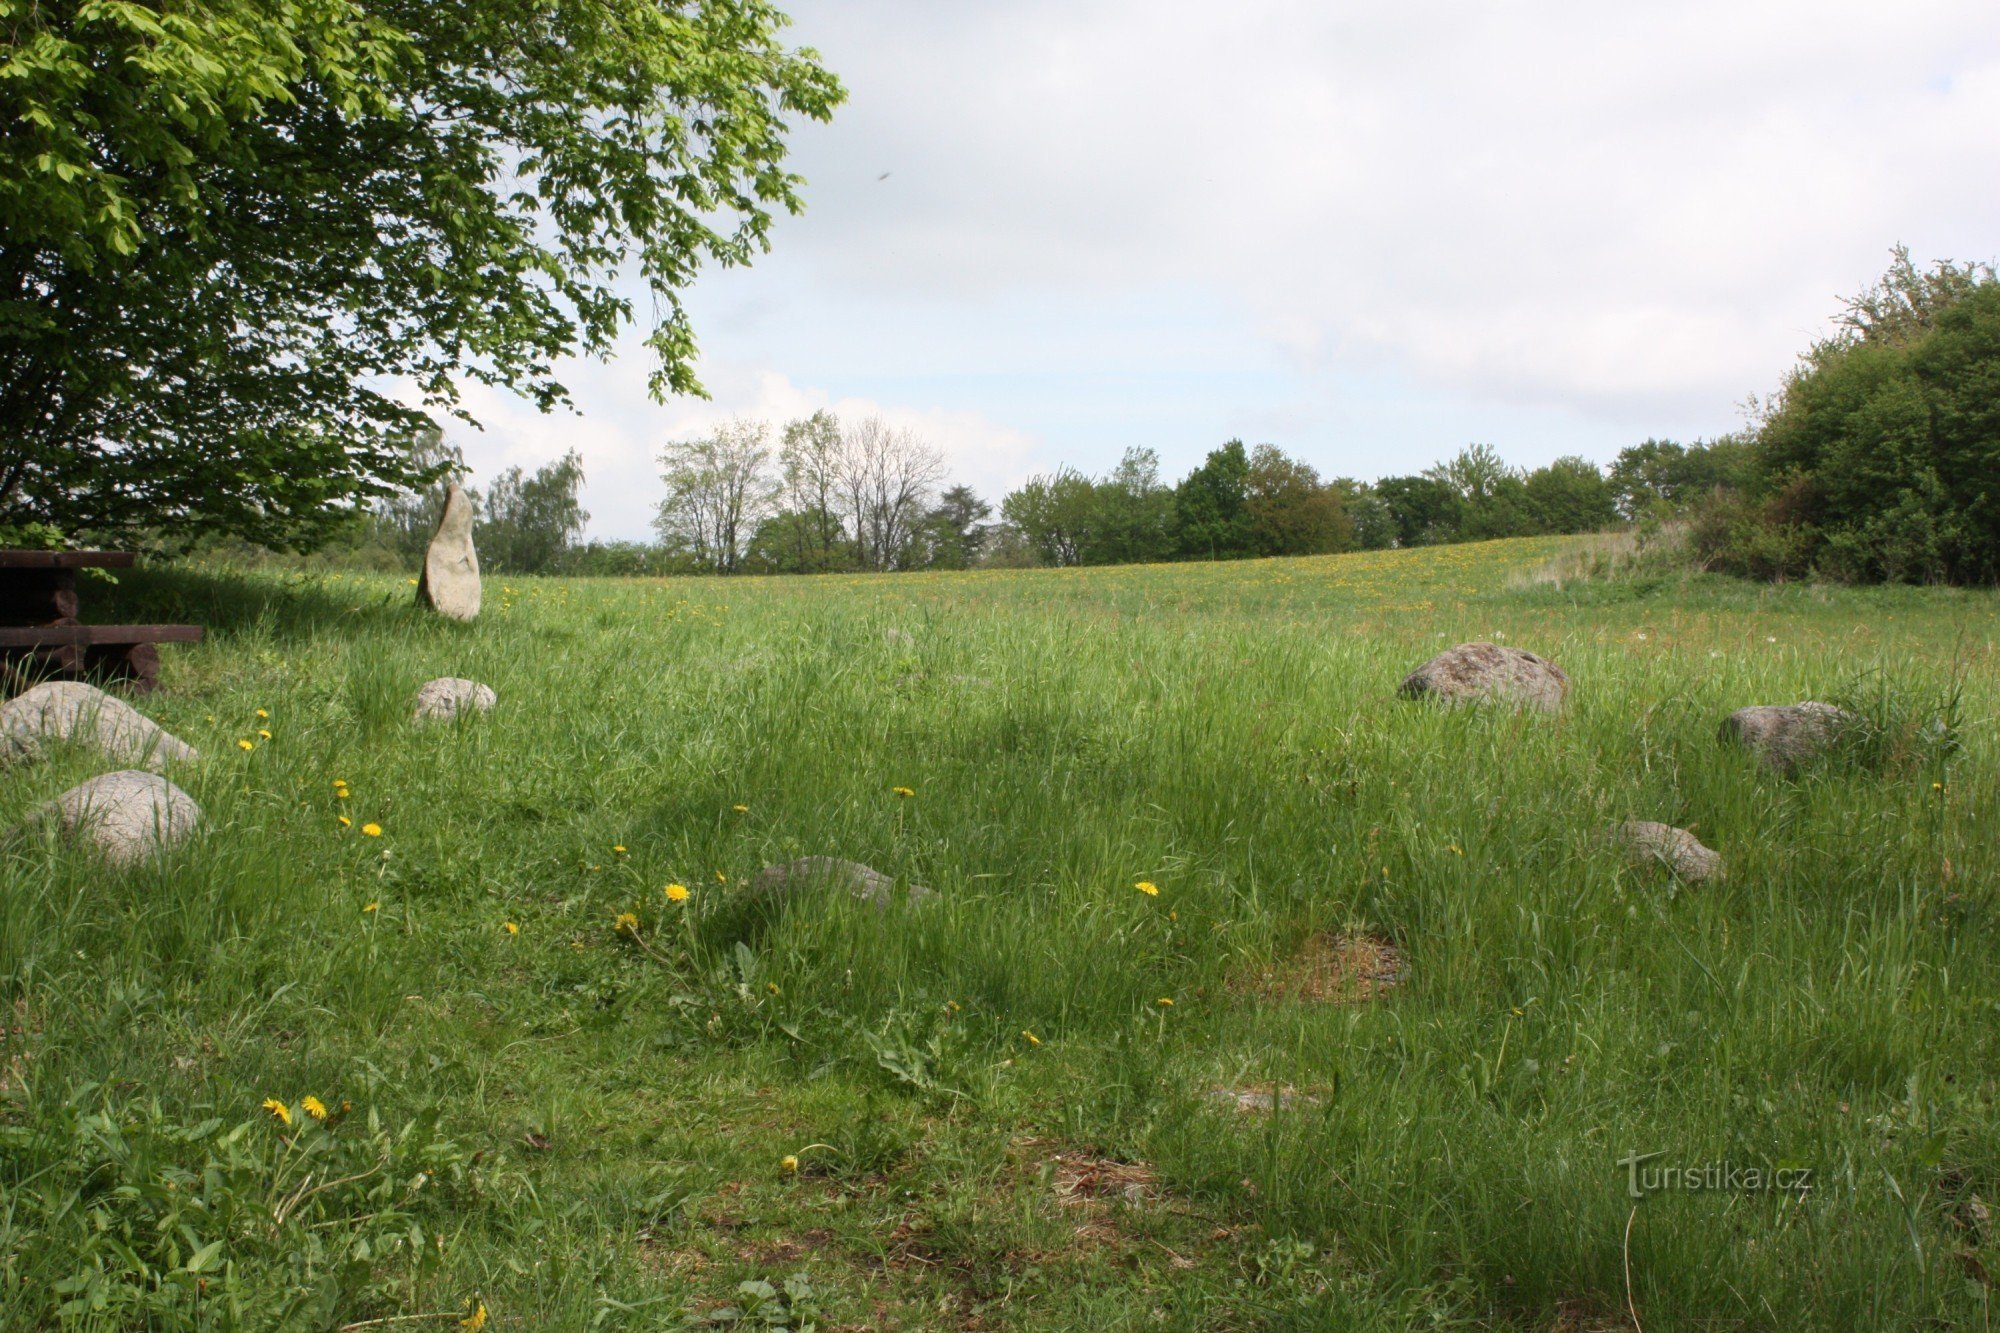 Celtic oppidum České Lhoticessa